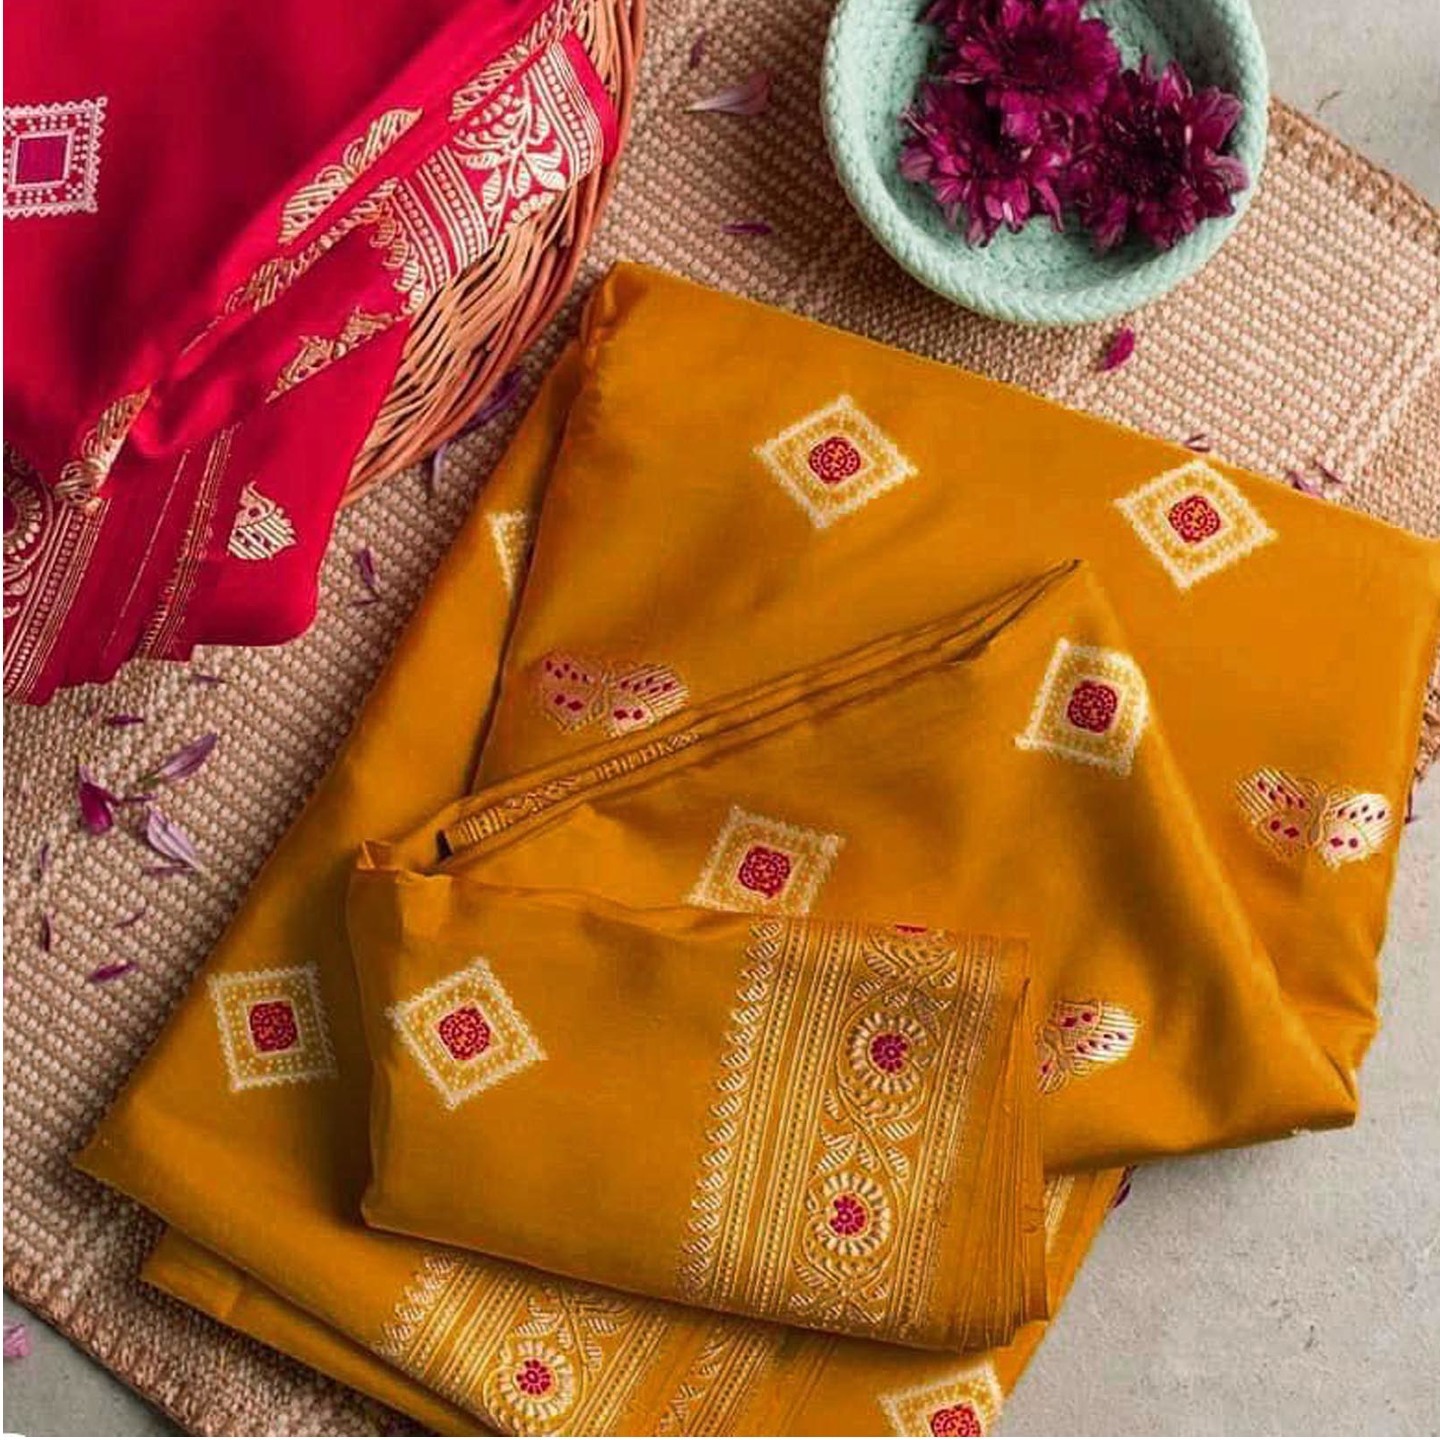 Occur Yellow Banarsi Blended Silk Saree